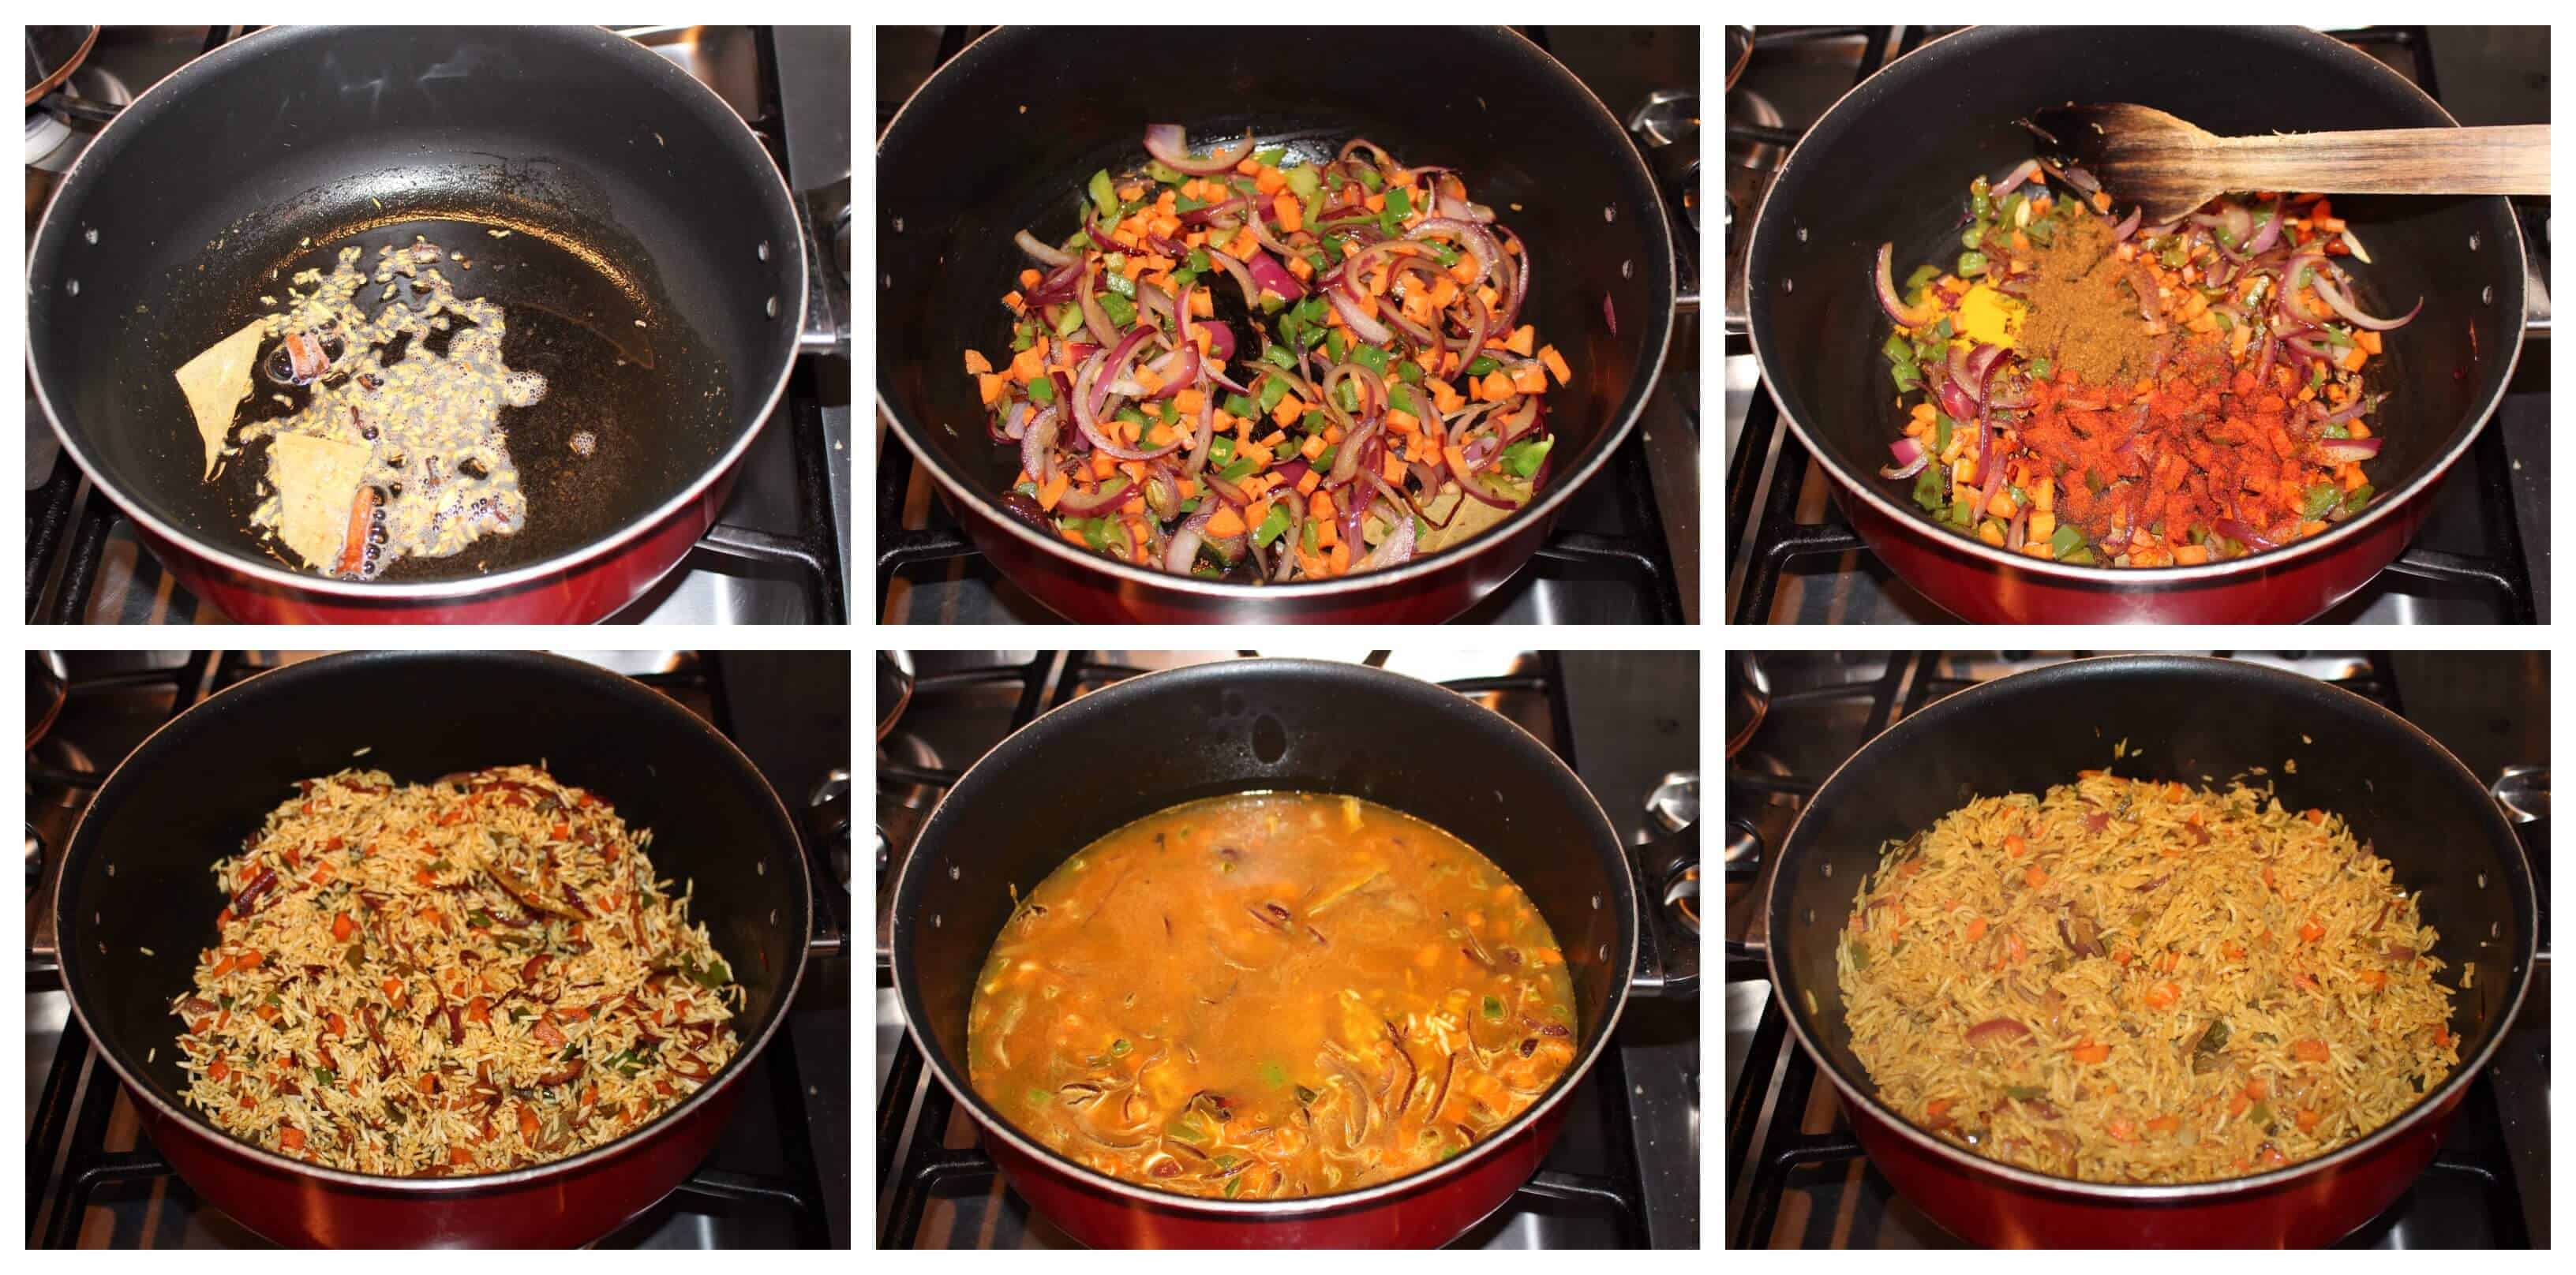 Step by step method to make Vegetable Biriyani